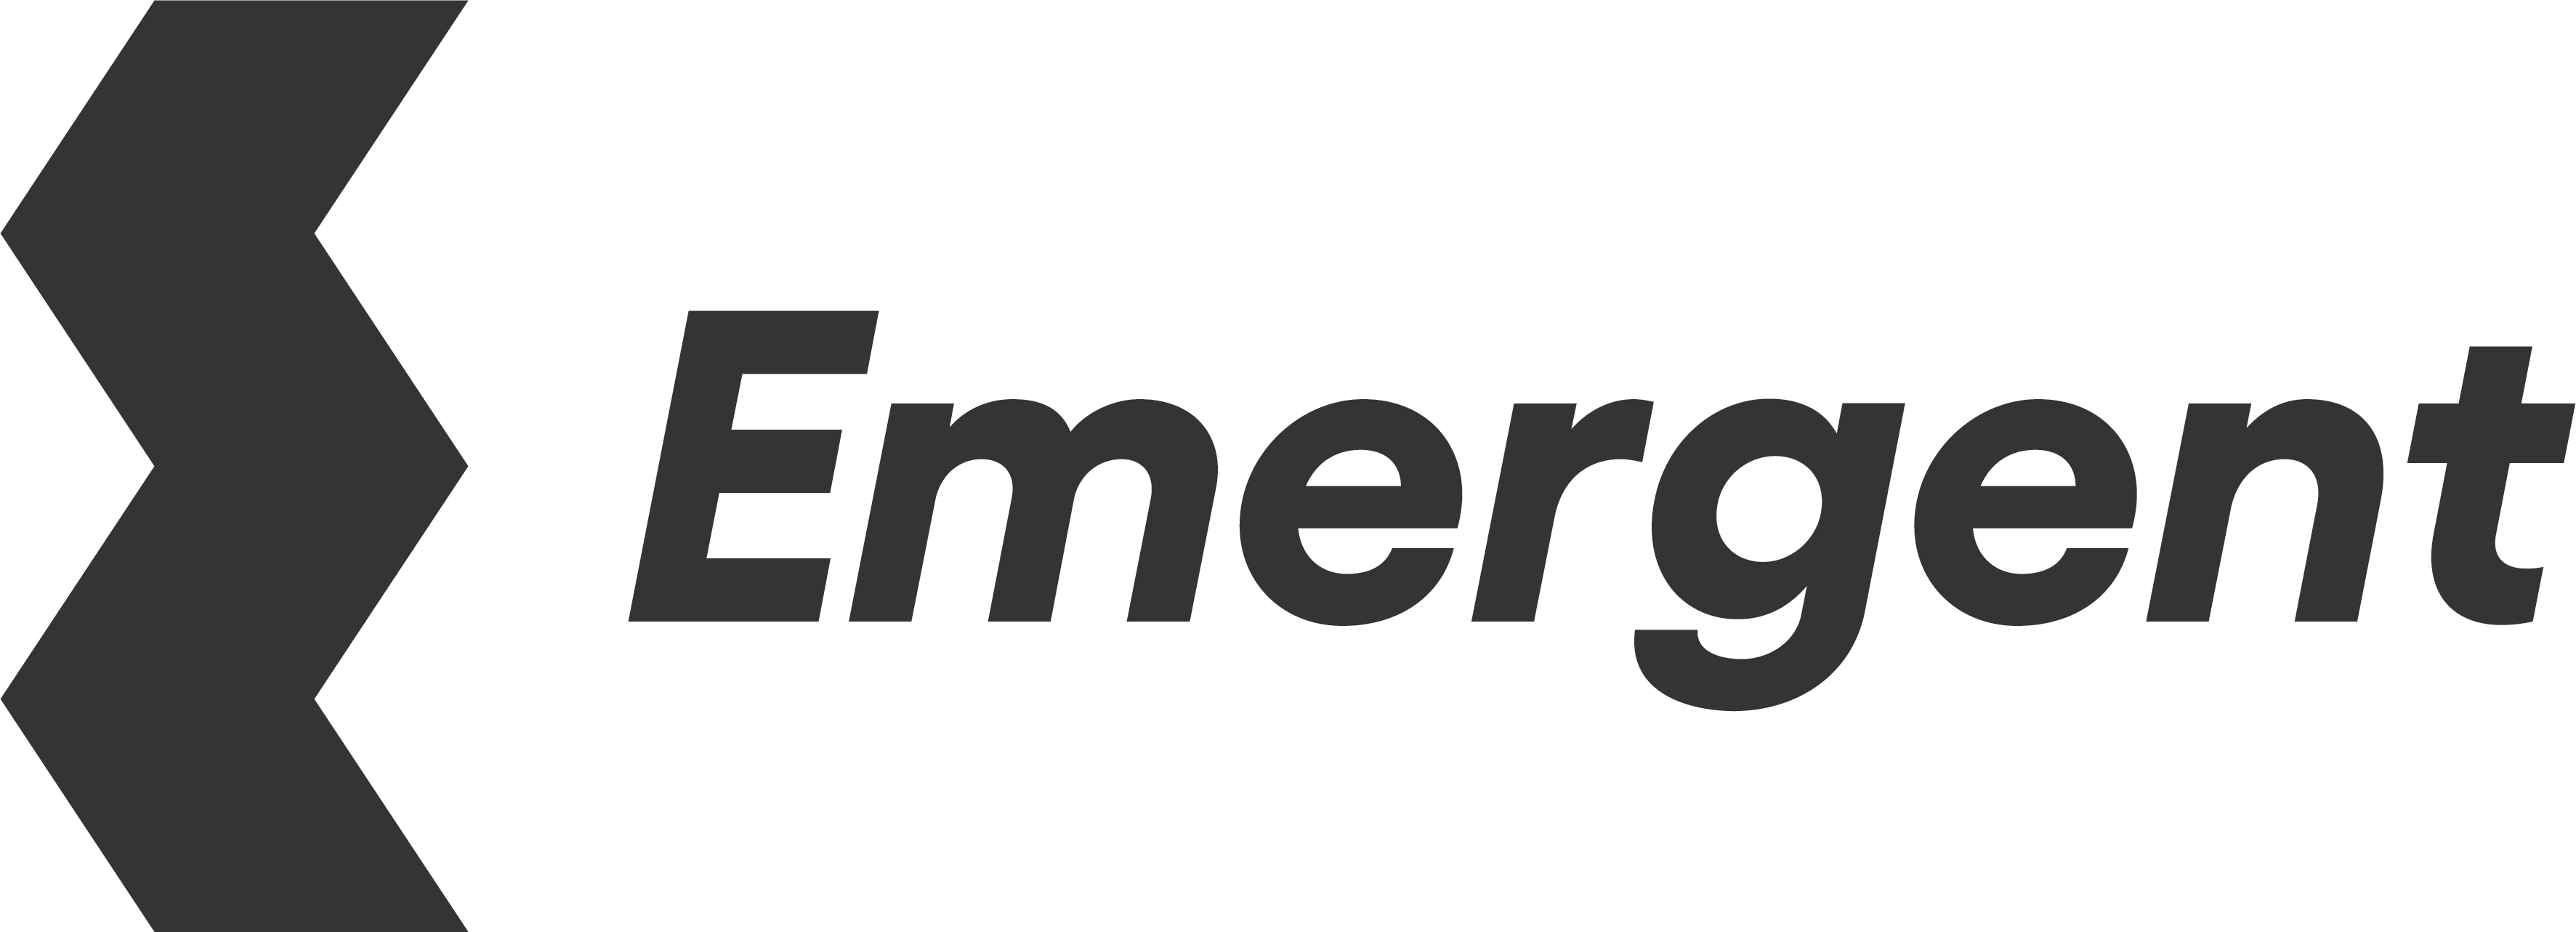 Emergent Logo